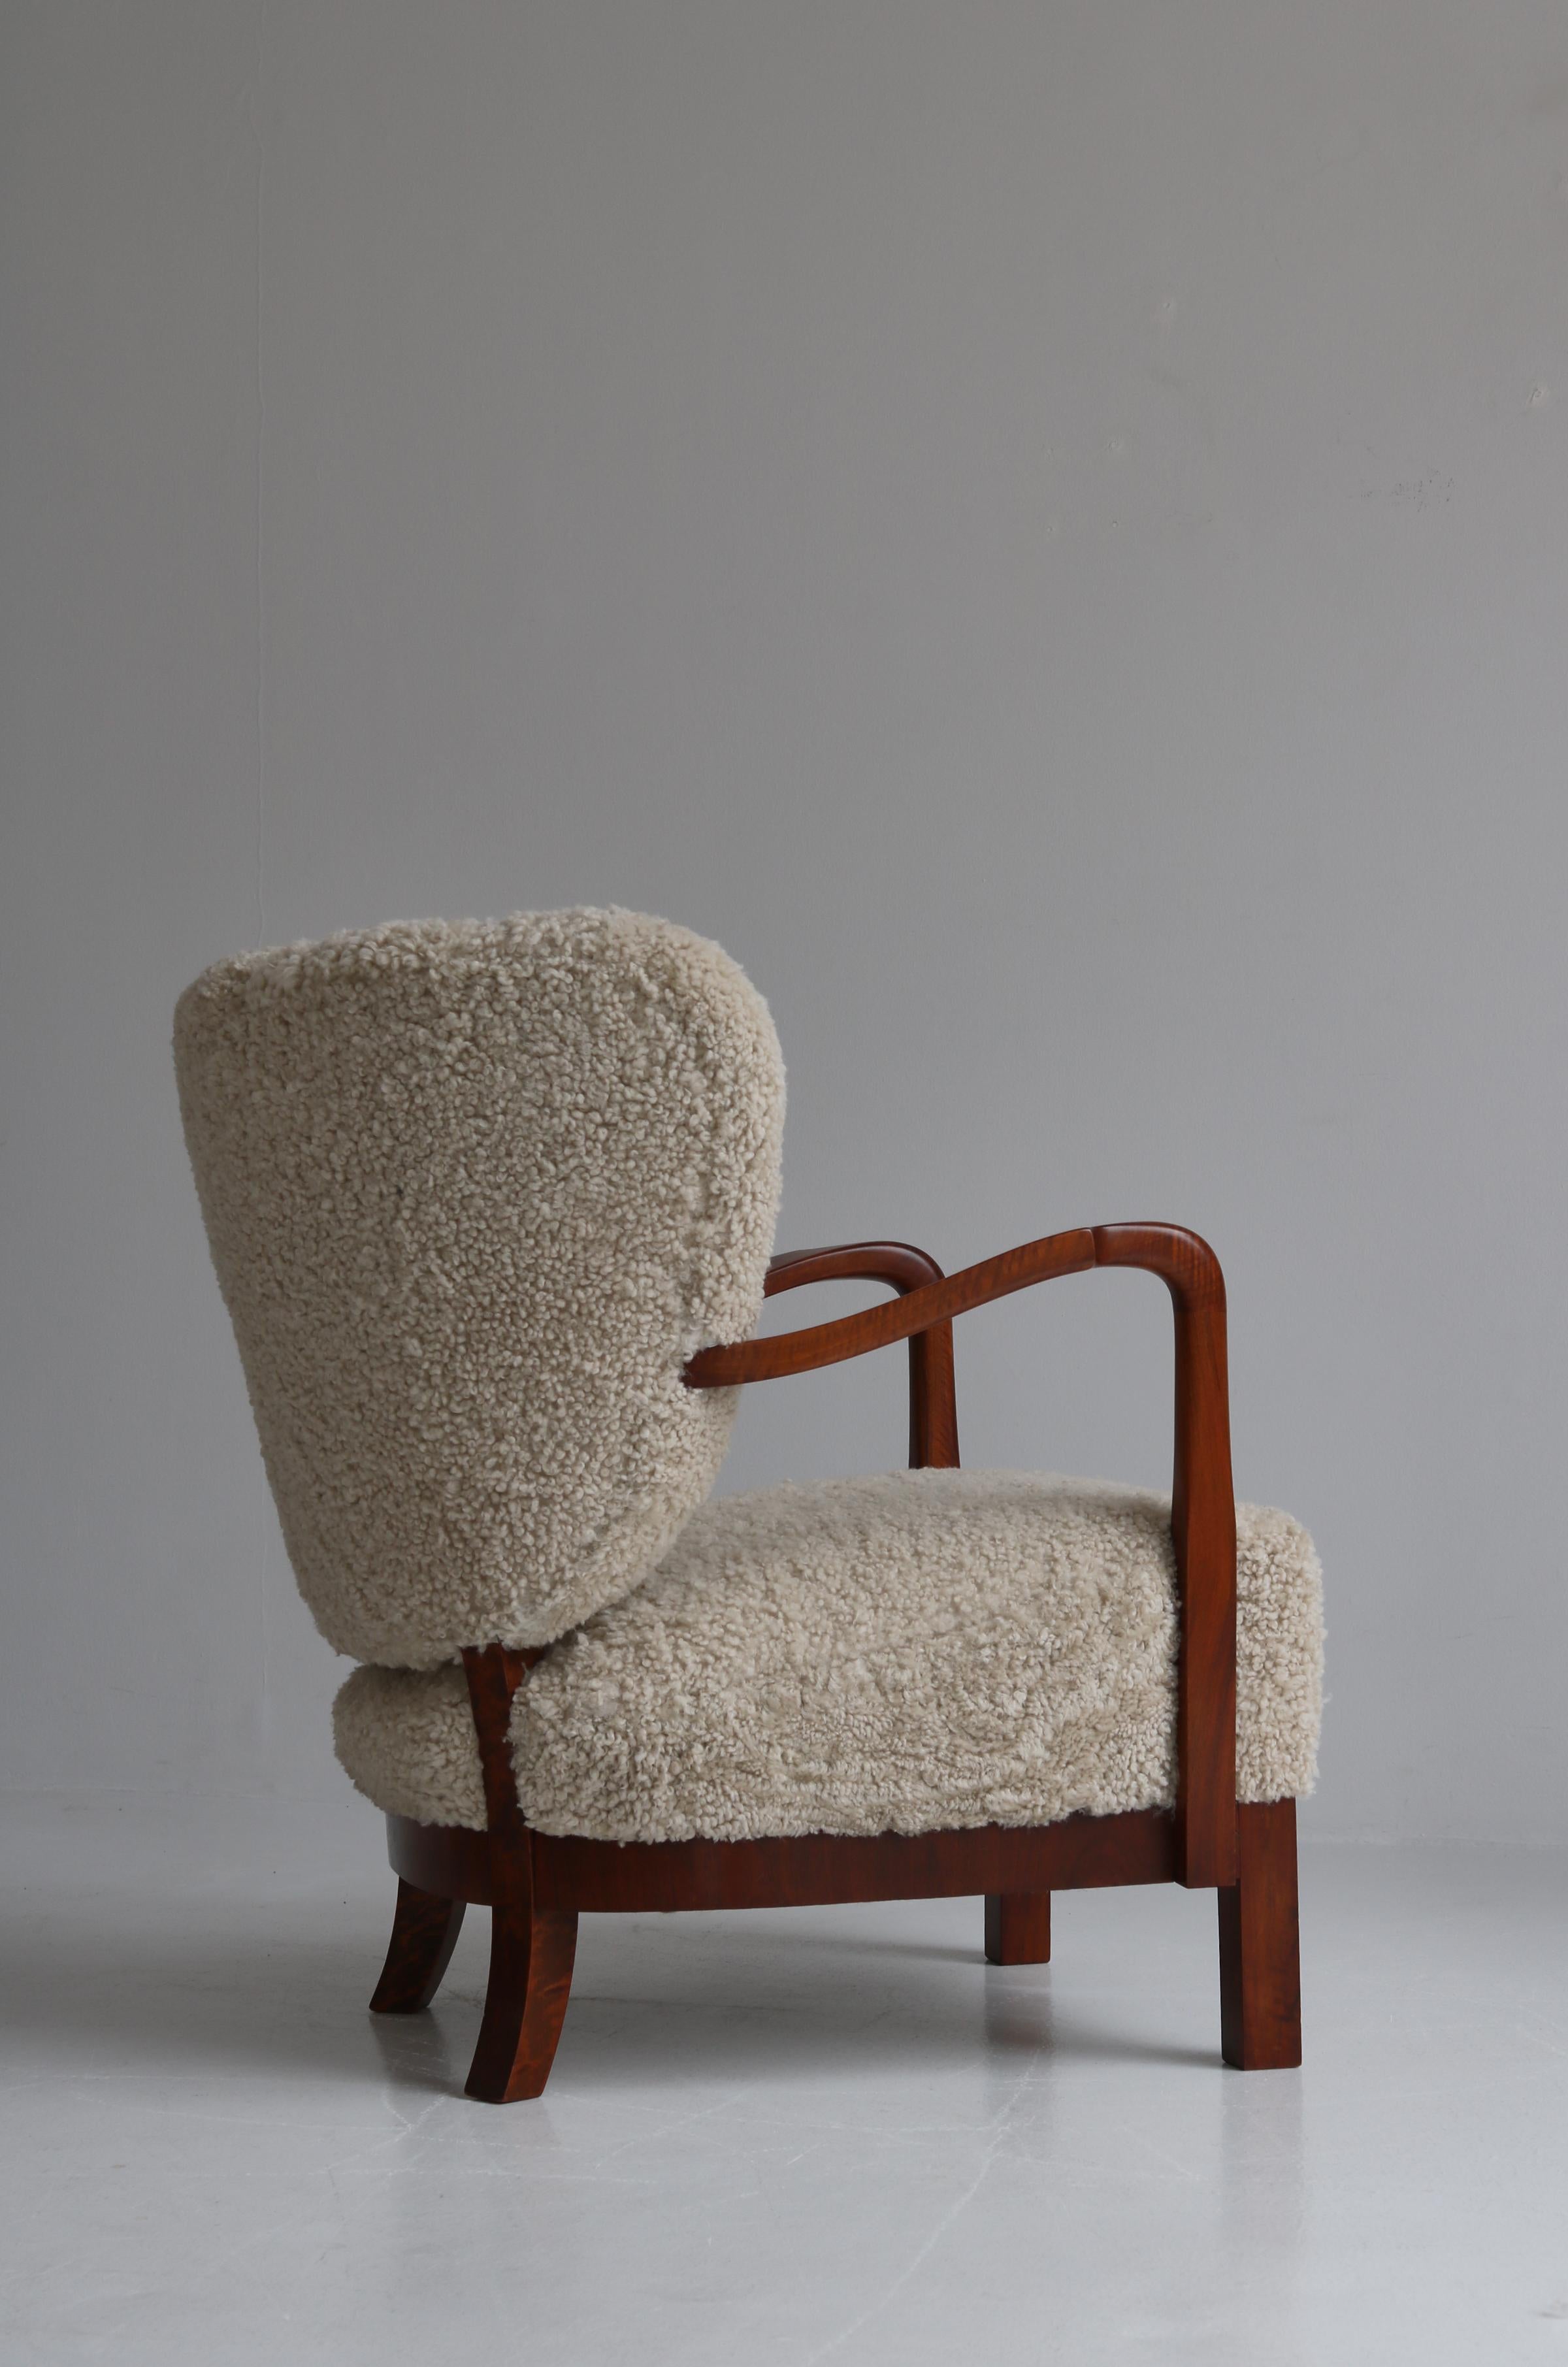 Viggo Boesen Lounge Chairs in Nutwood and Sheepskin, 1930s Danish Modern For Sale 3